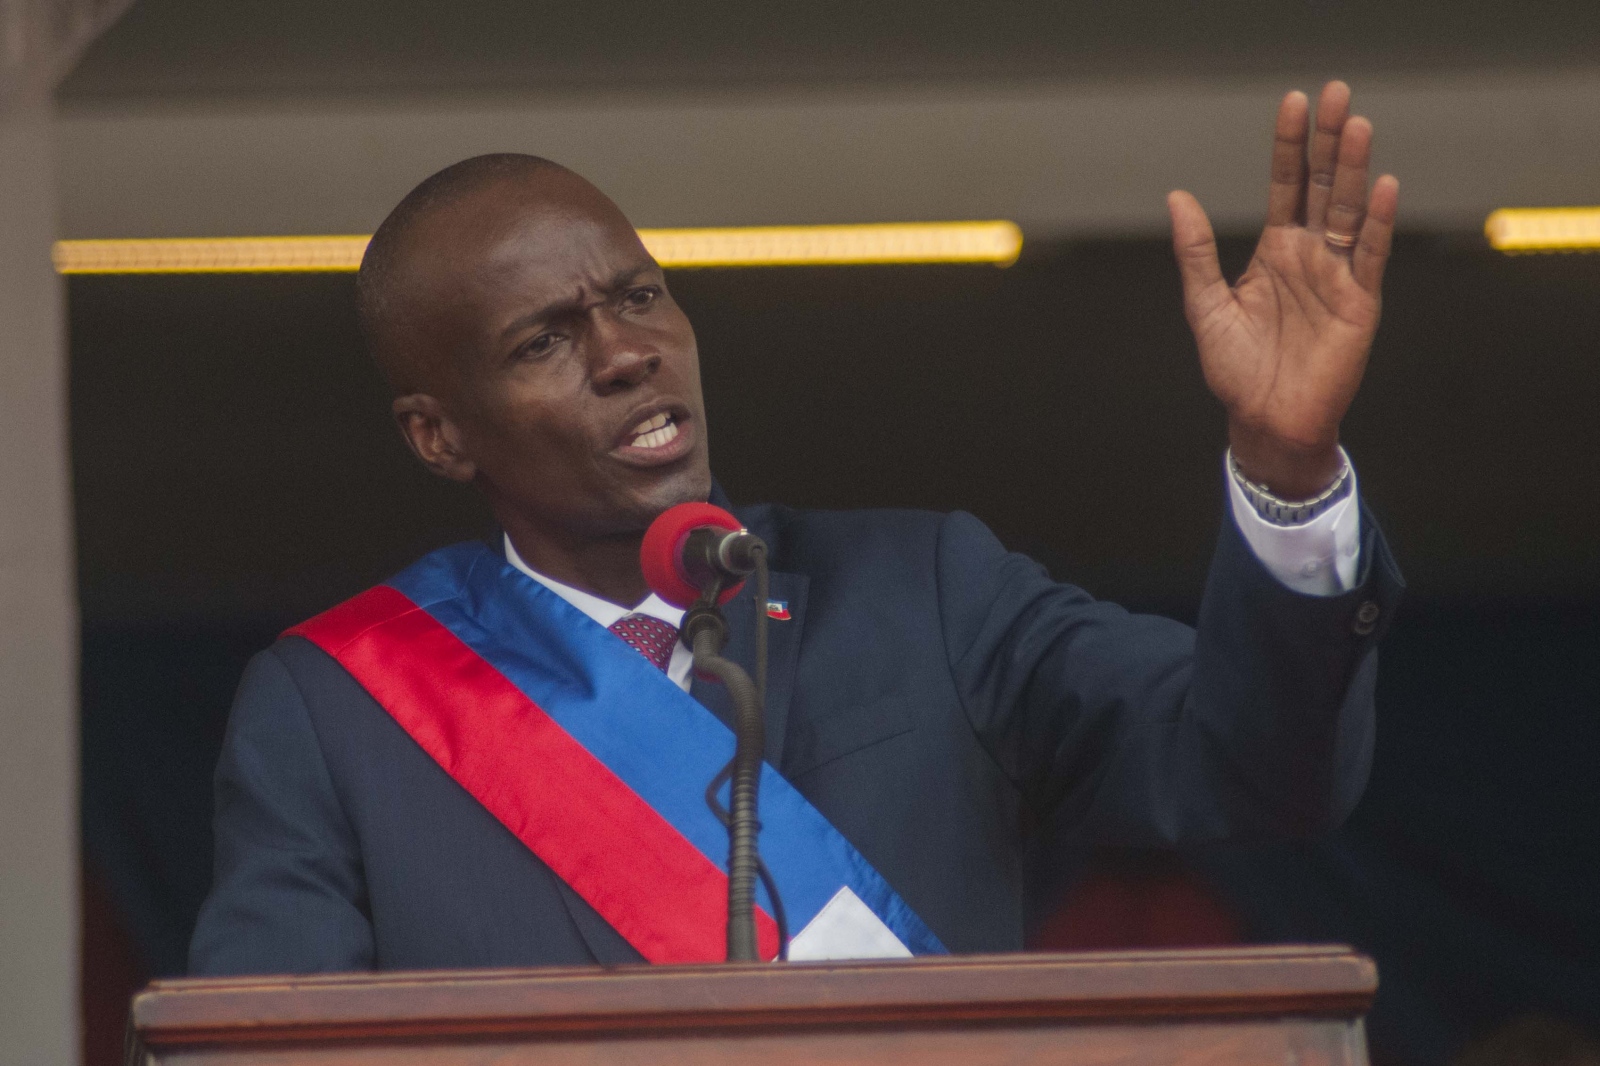 Haiti Inauguration of the 58th President Jovenel Moise -                 
                